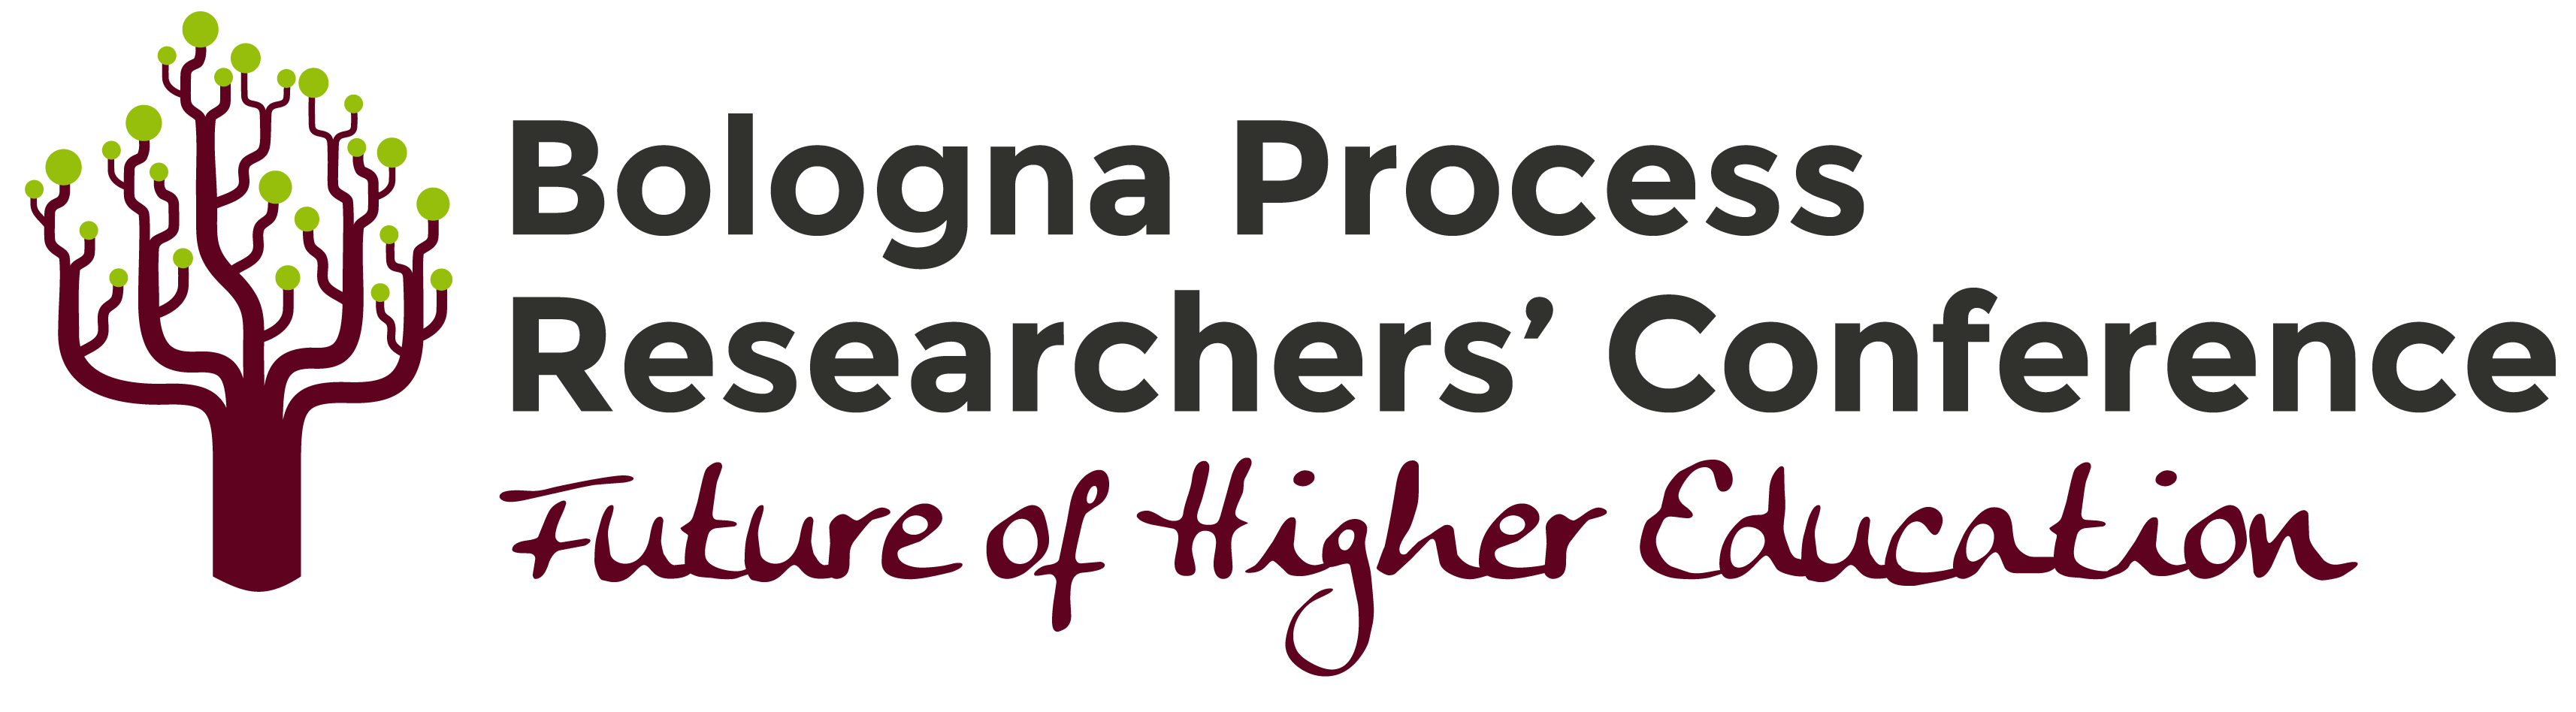 Bologna Process Researchers Conference